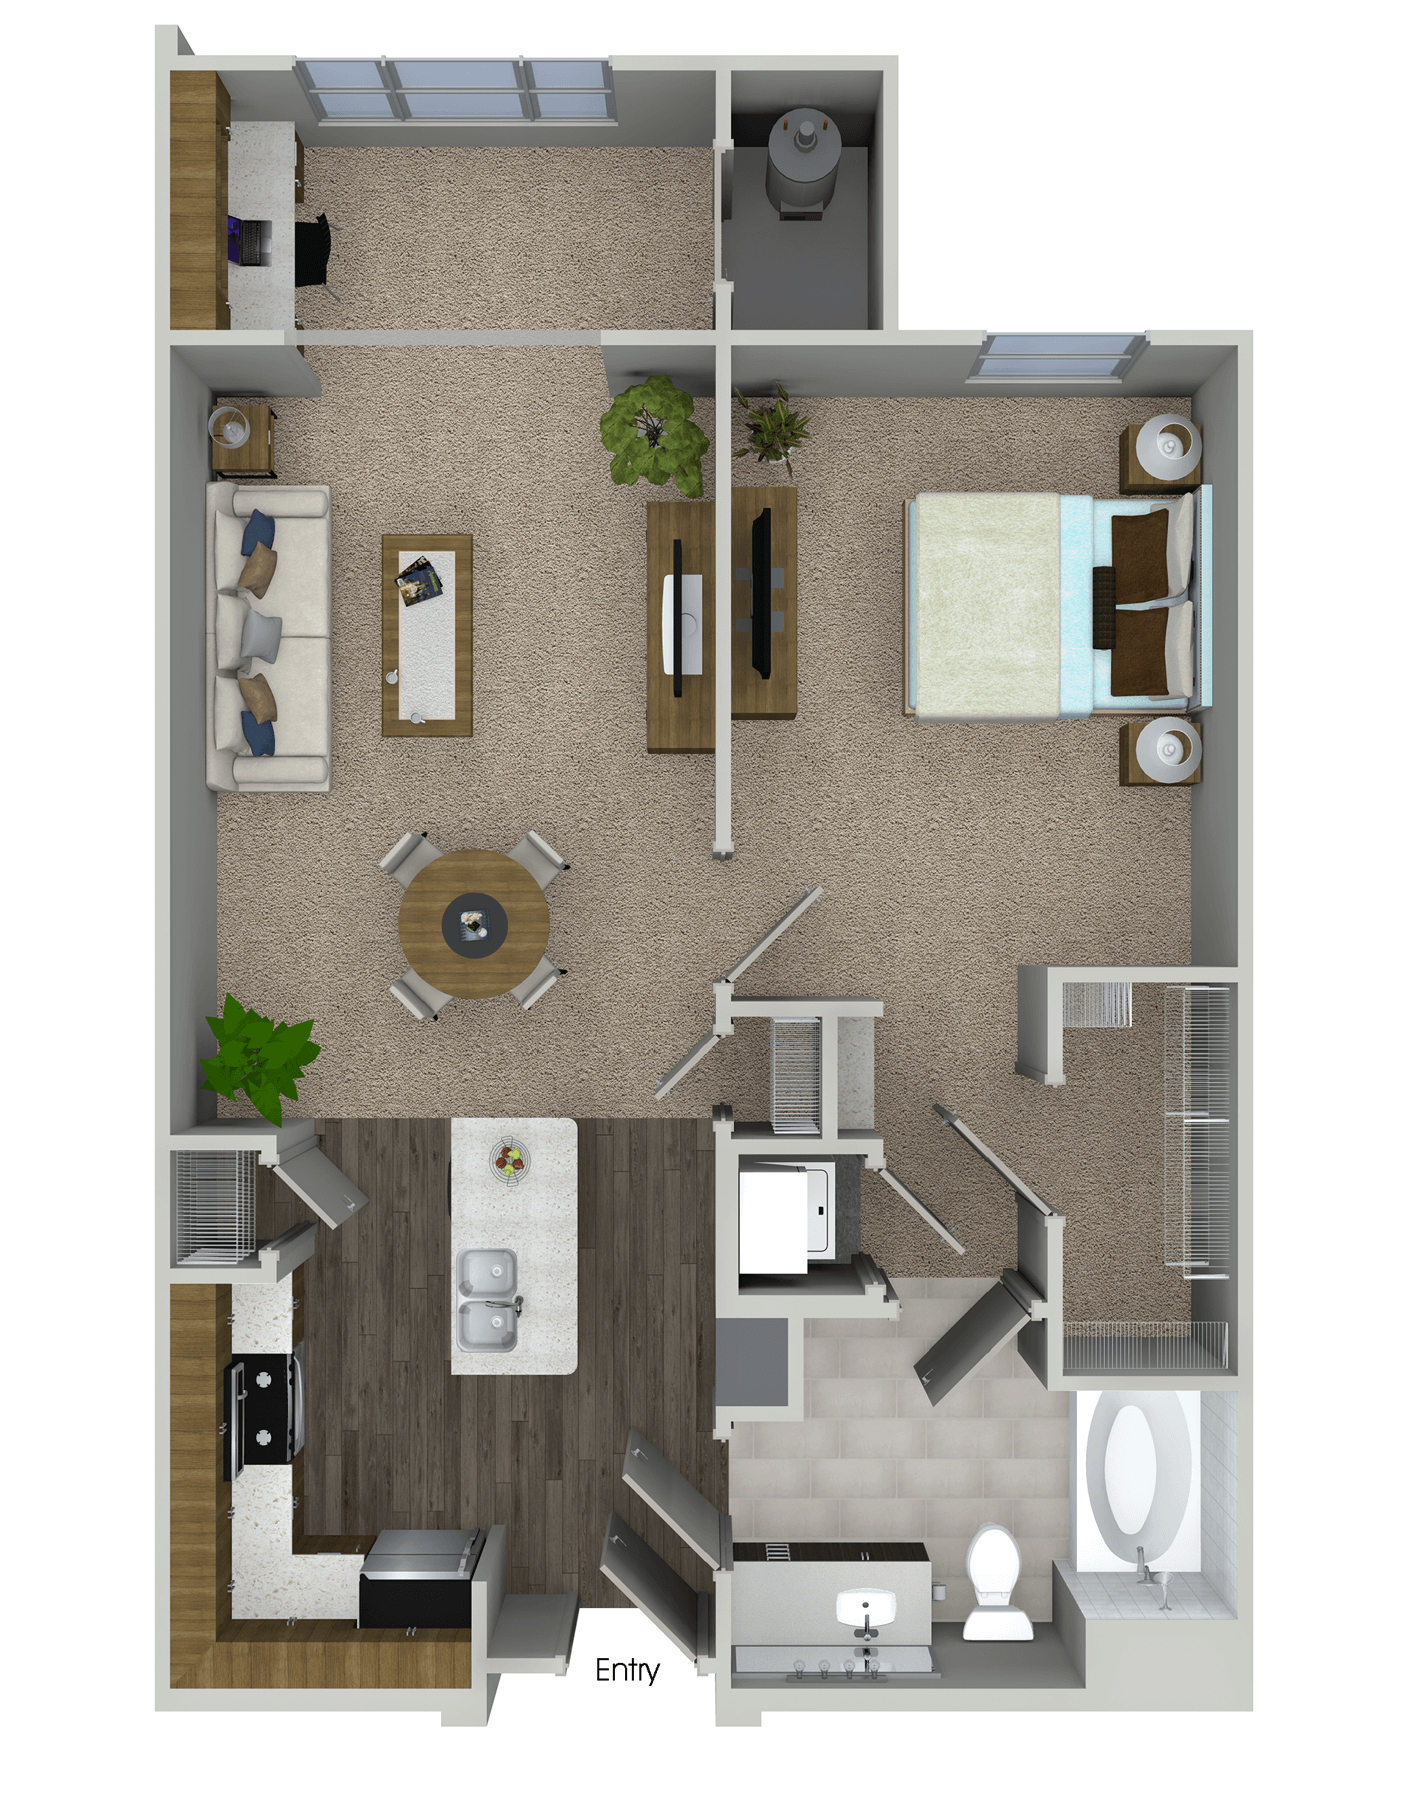 Floorplan for Apartment #2310, 1 bedroom unit at Halstead Marlborough